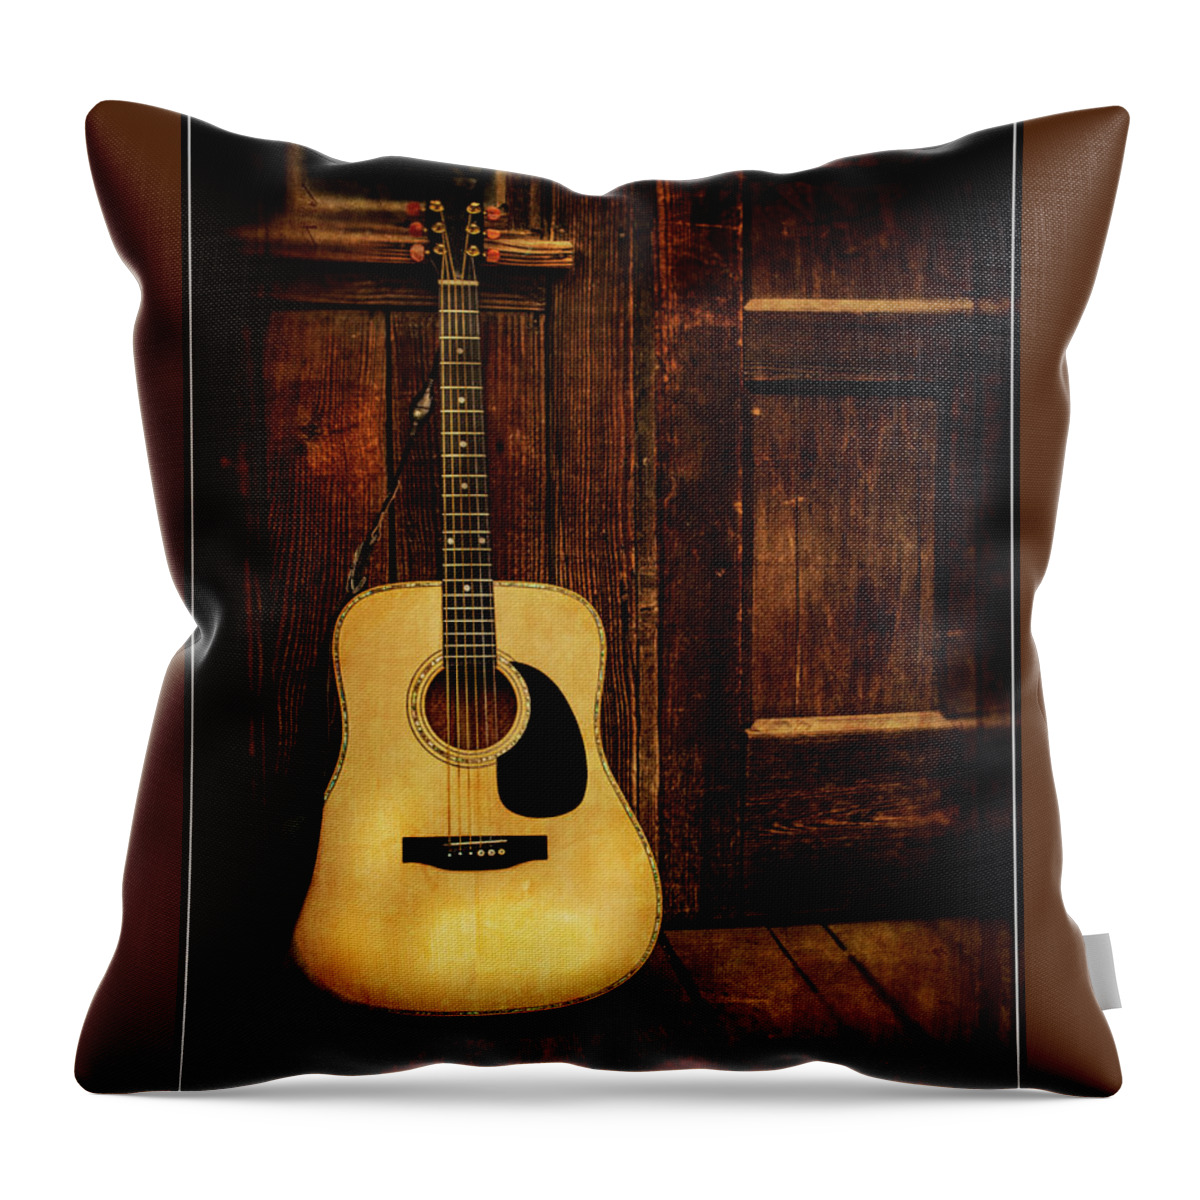 Topanga Throw Pillow featuring the photograph Topanga Guitar by Scott Parker